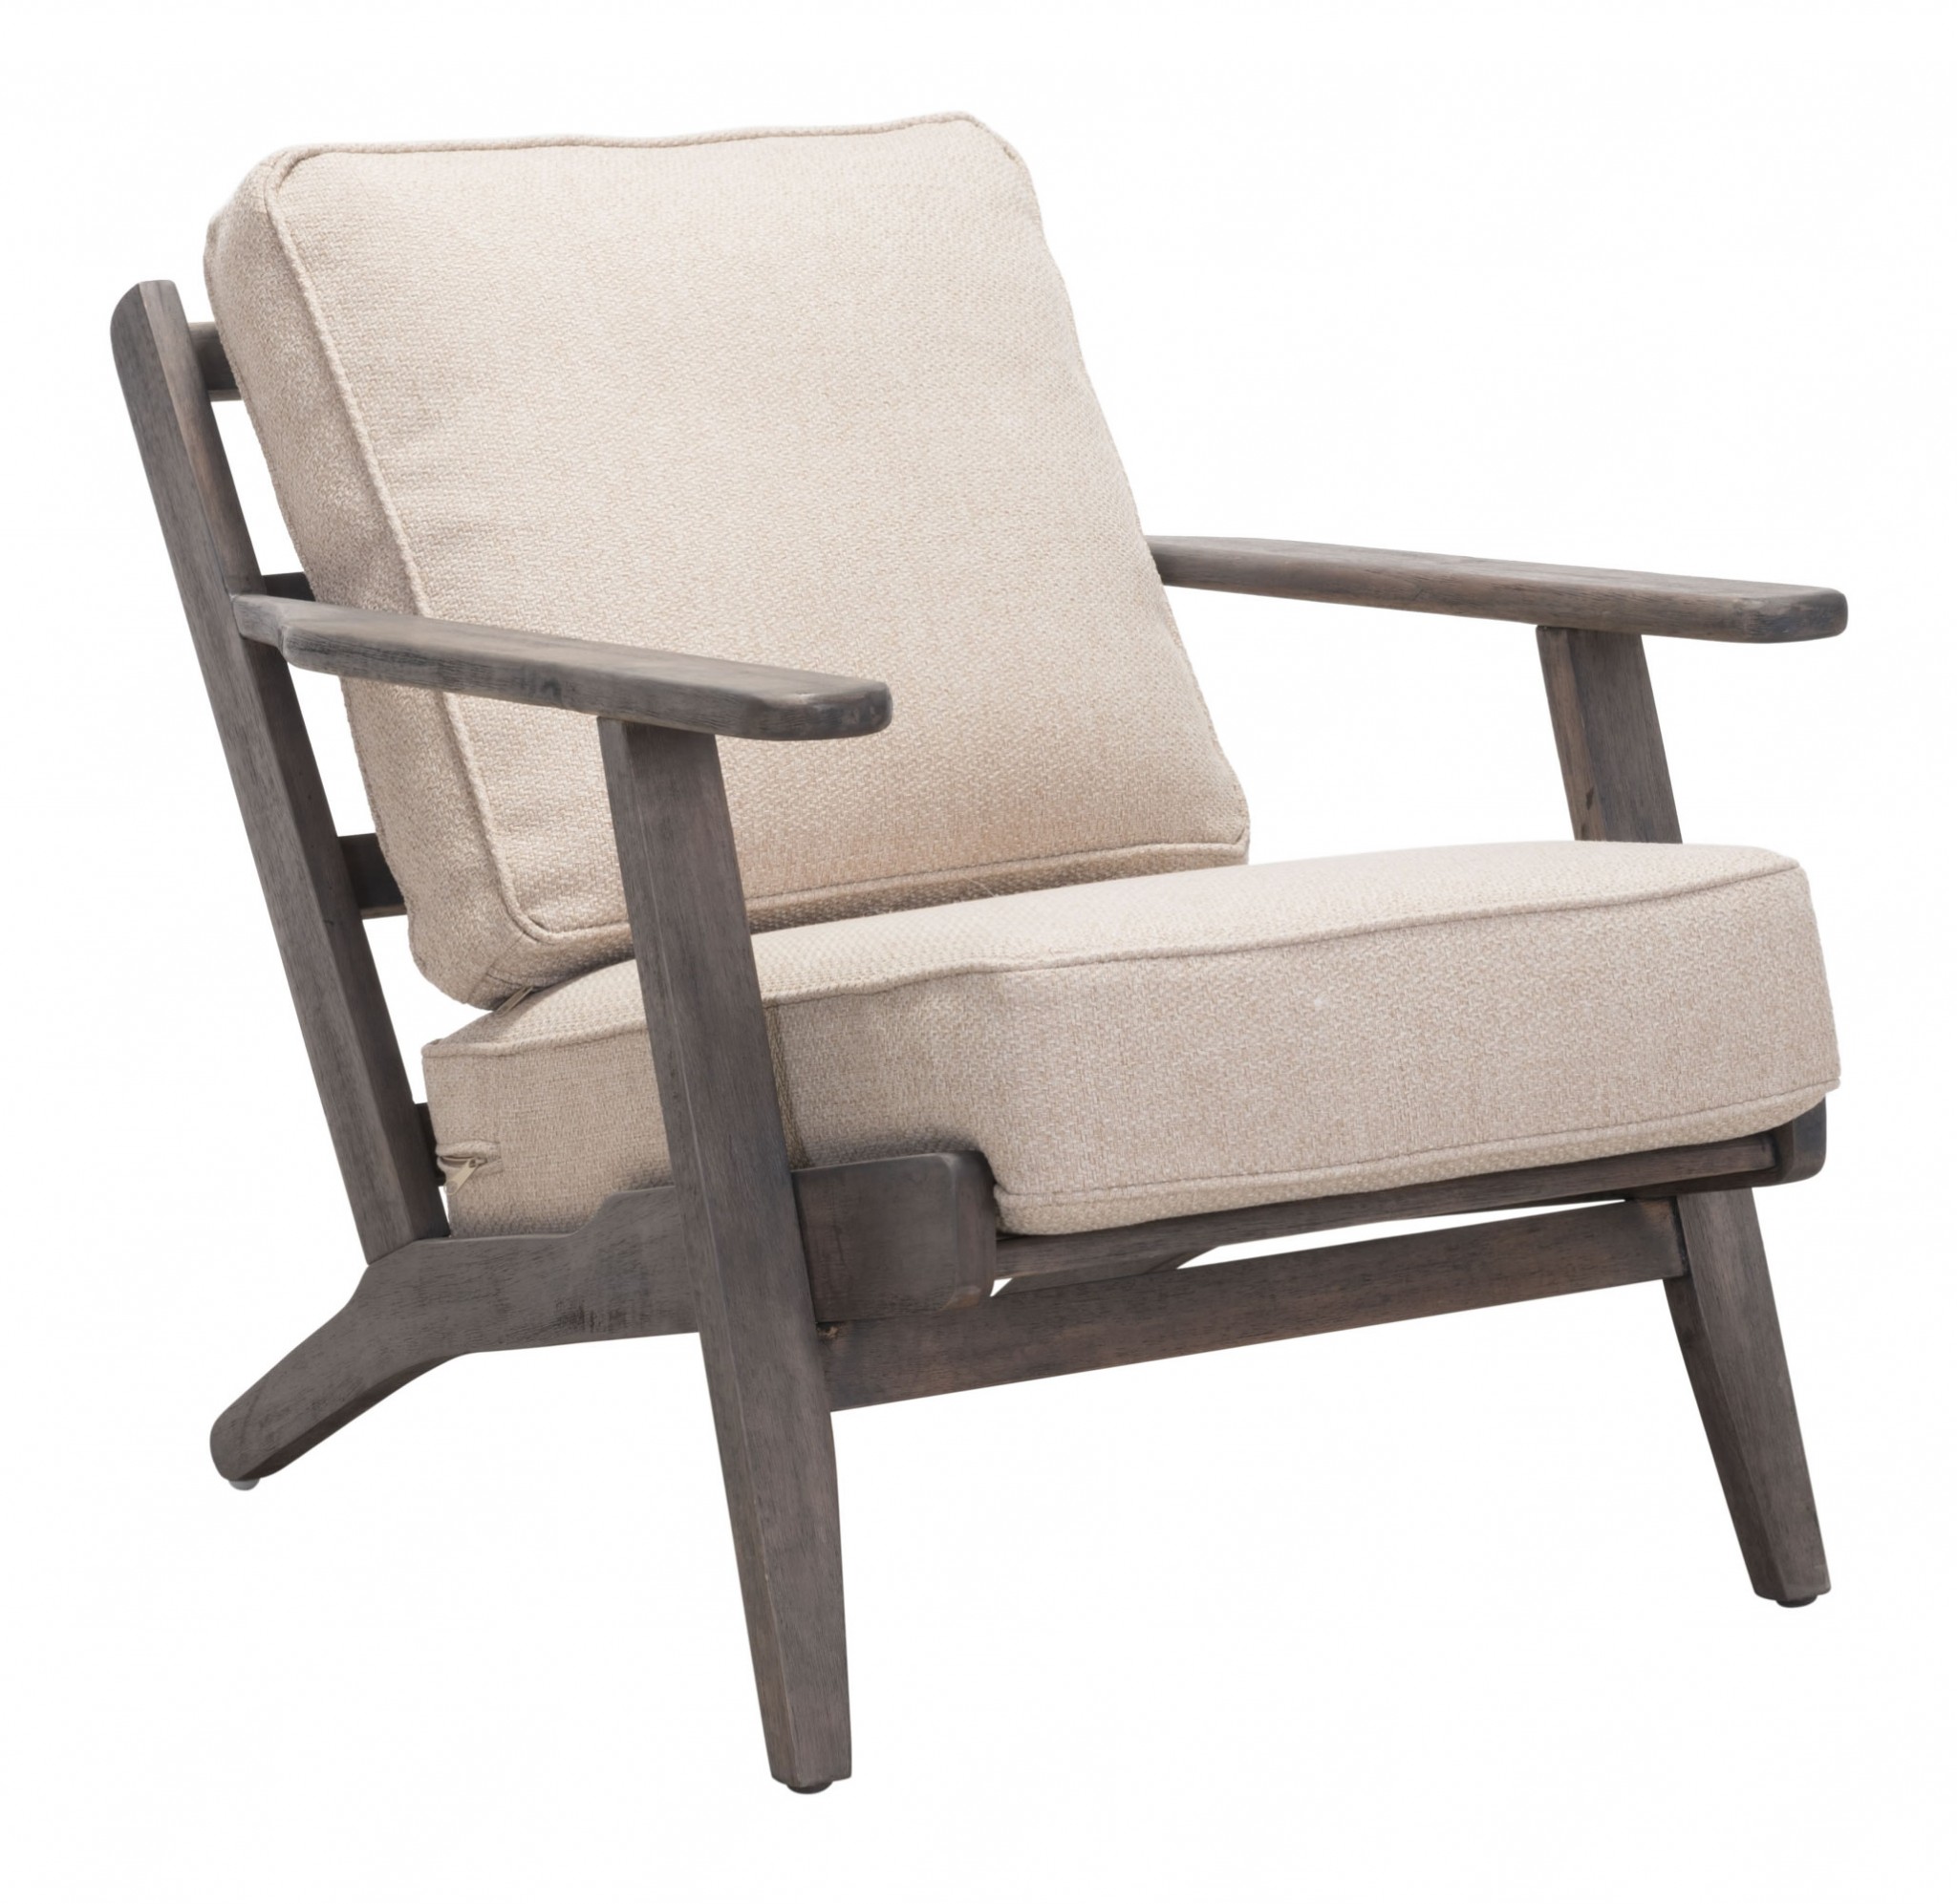 28.9" x 37.4" x 31.9" Beige & Dark Brown, Poly Blend, Rubber Wood, Lounge Chair